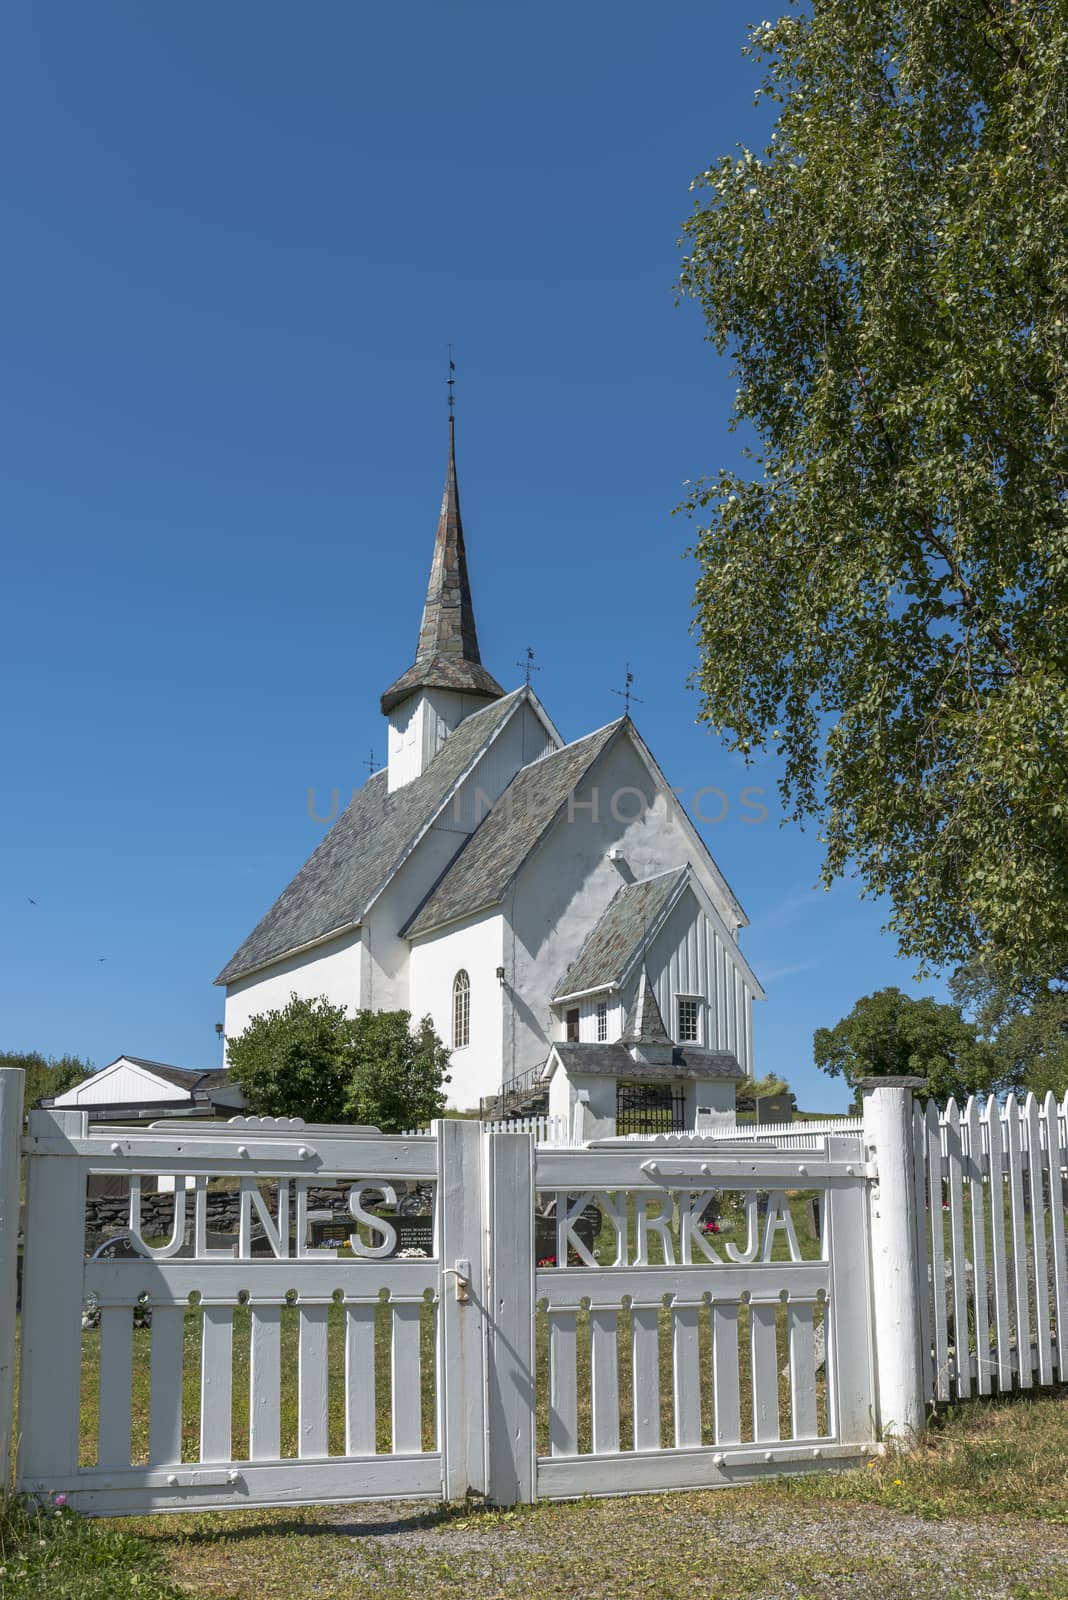 Europe Norway Ulnes Kyrkje church along lakeshore in central Norway